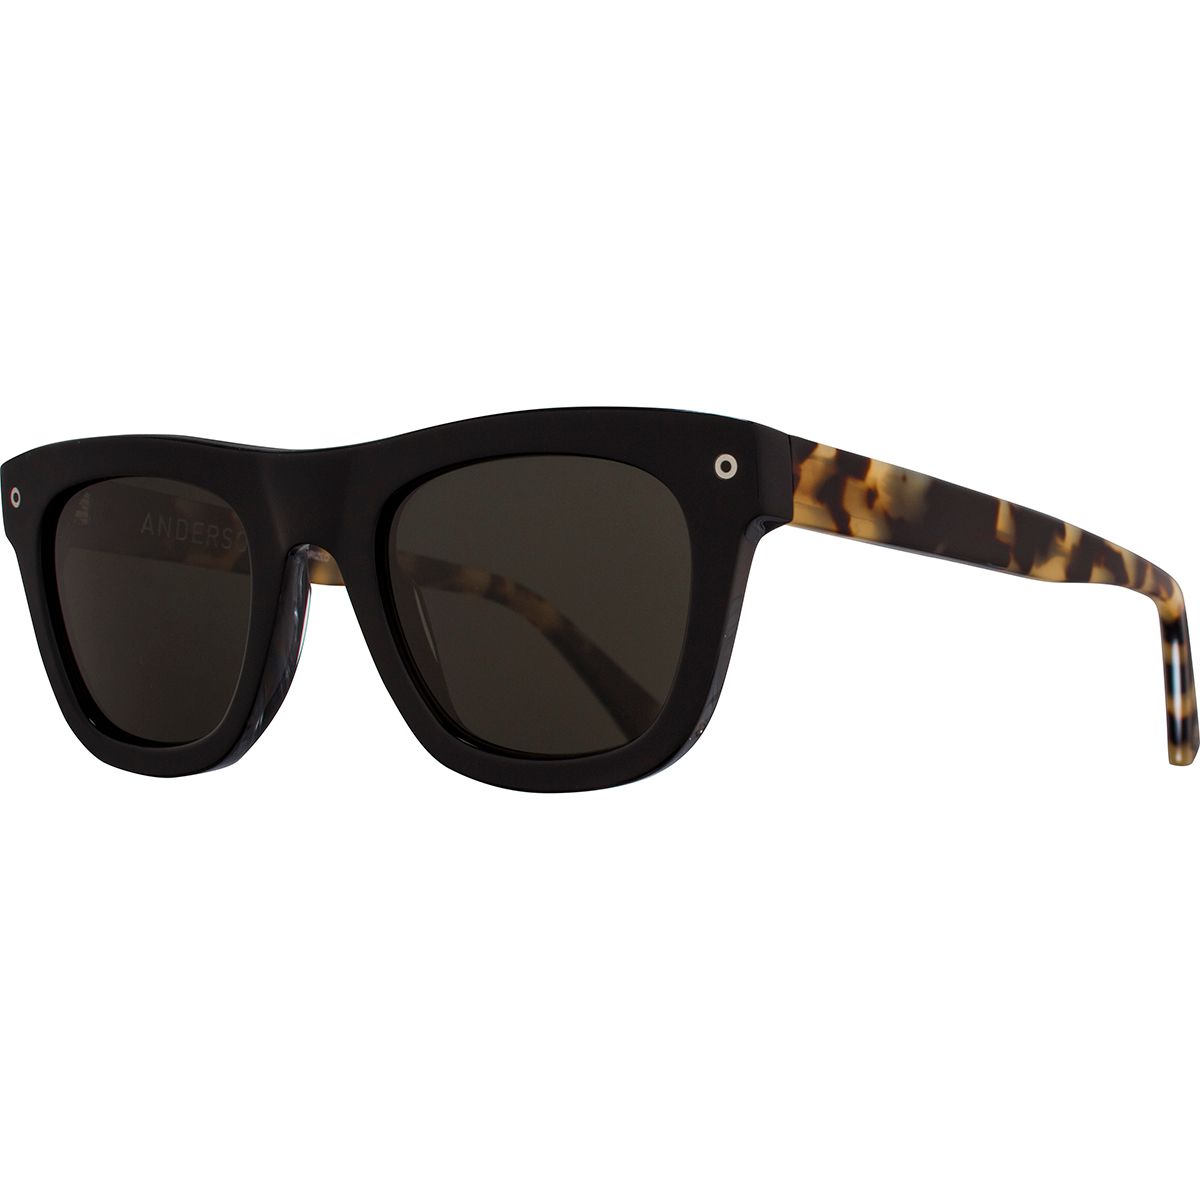 Electric Anderson Polarized Sunglasses